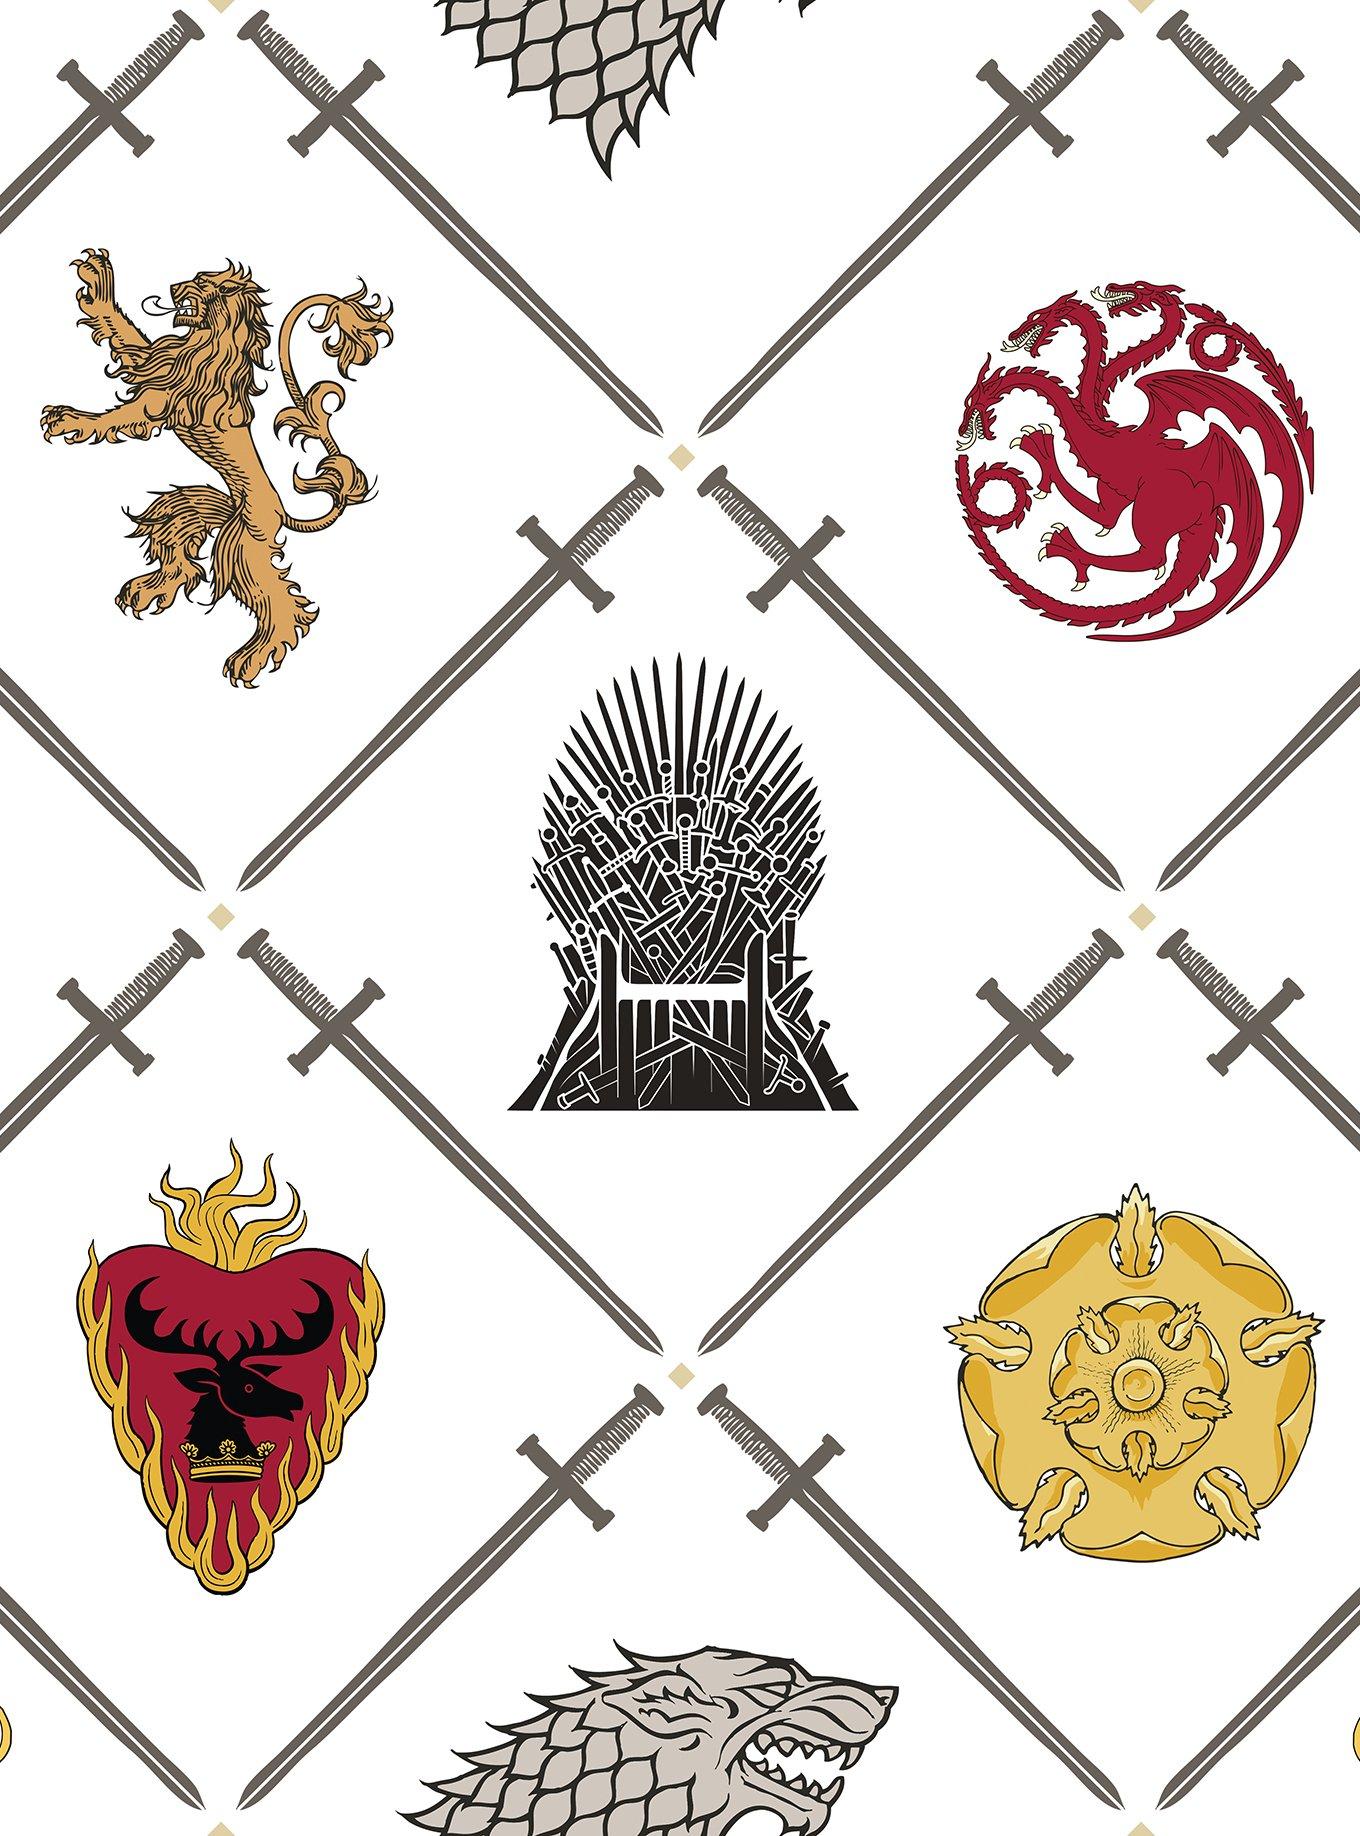 game of thrones house symbols